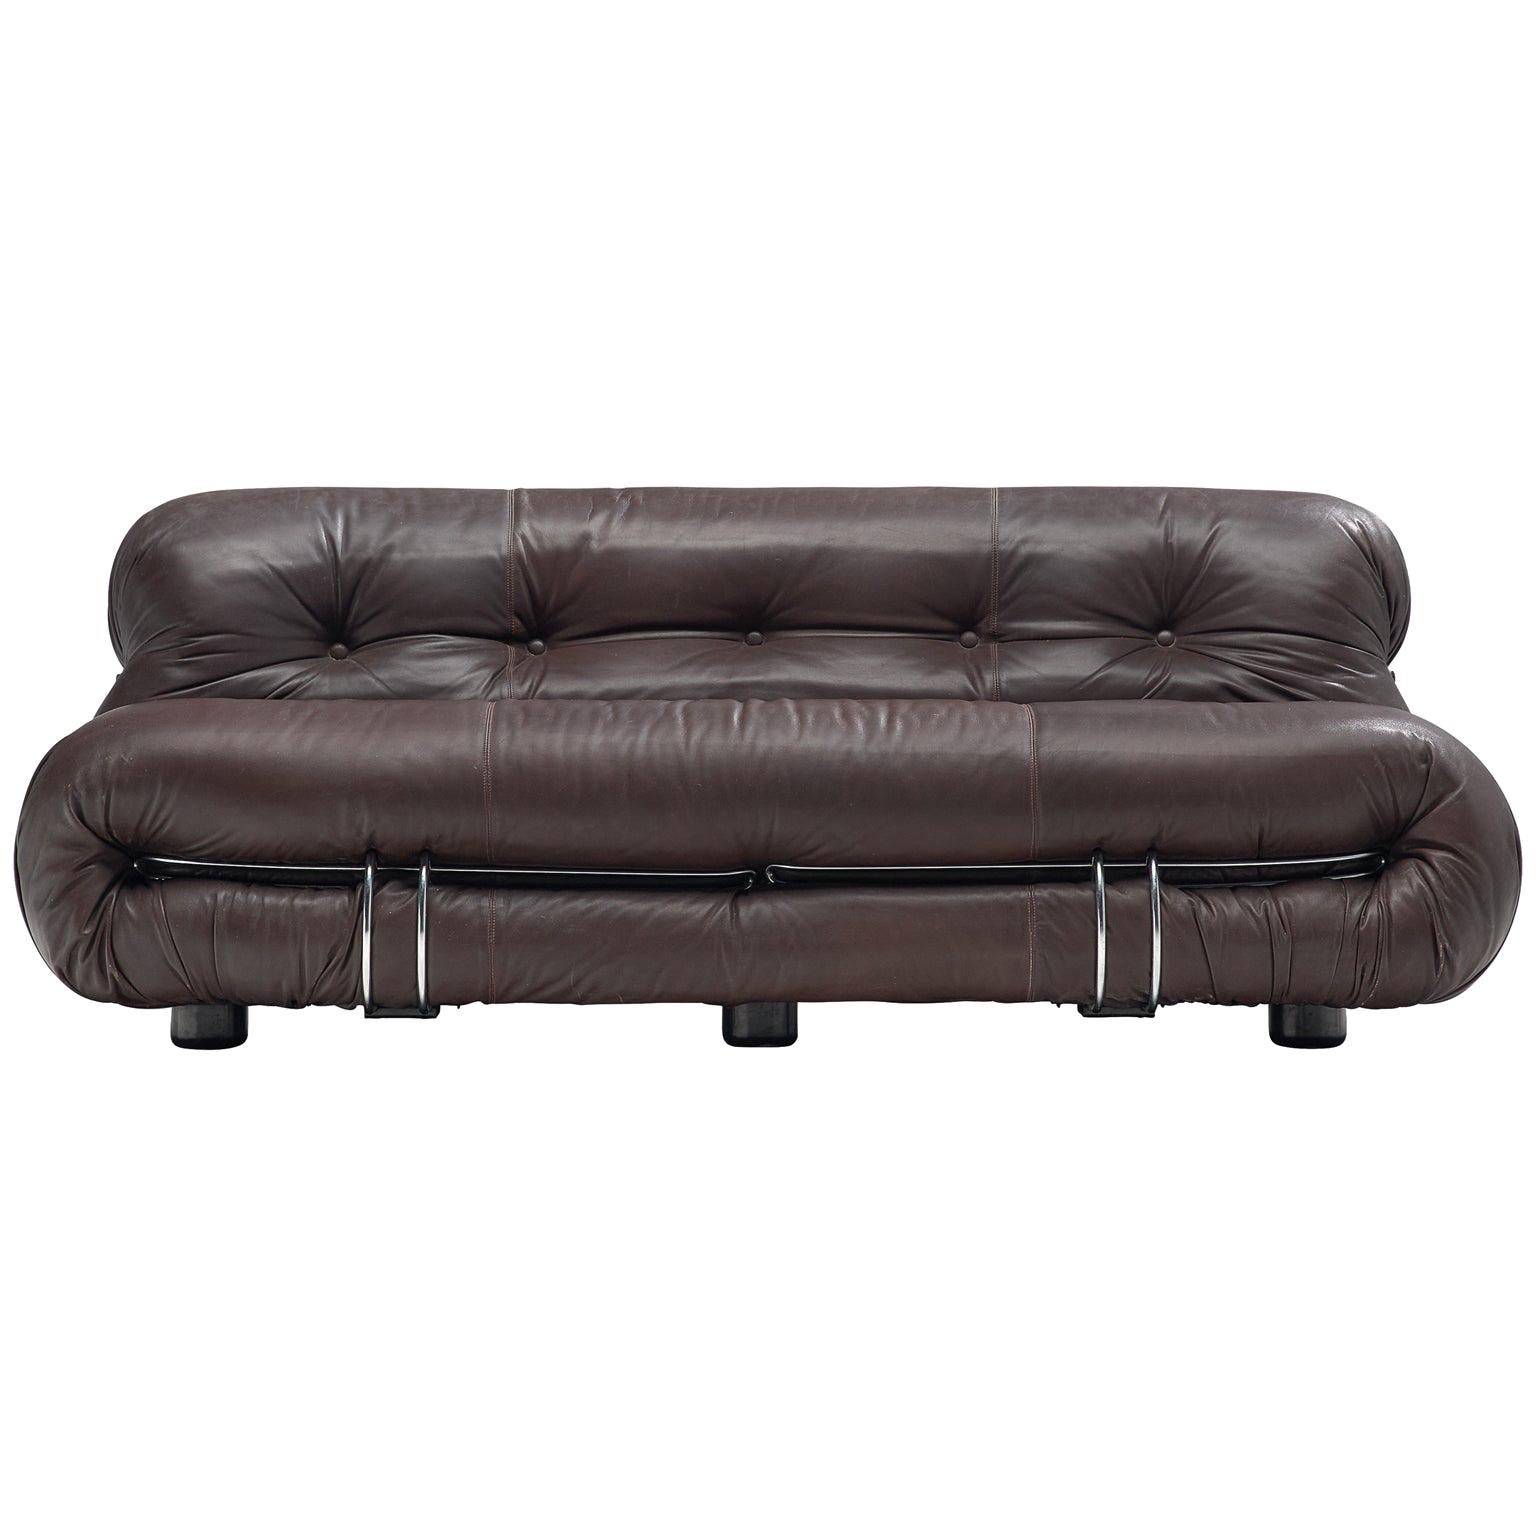 Afra & Tobia Scarpa 'Soriana' Sofa in Chocolate Brown Leather